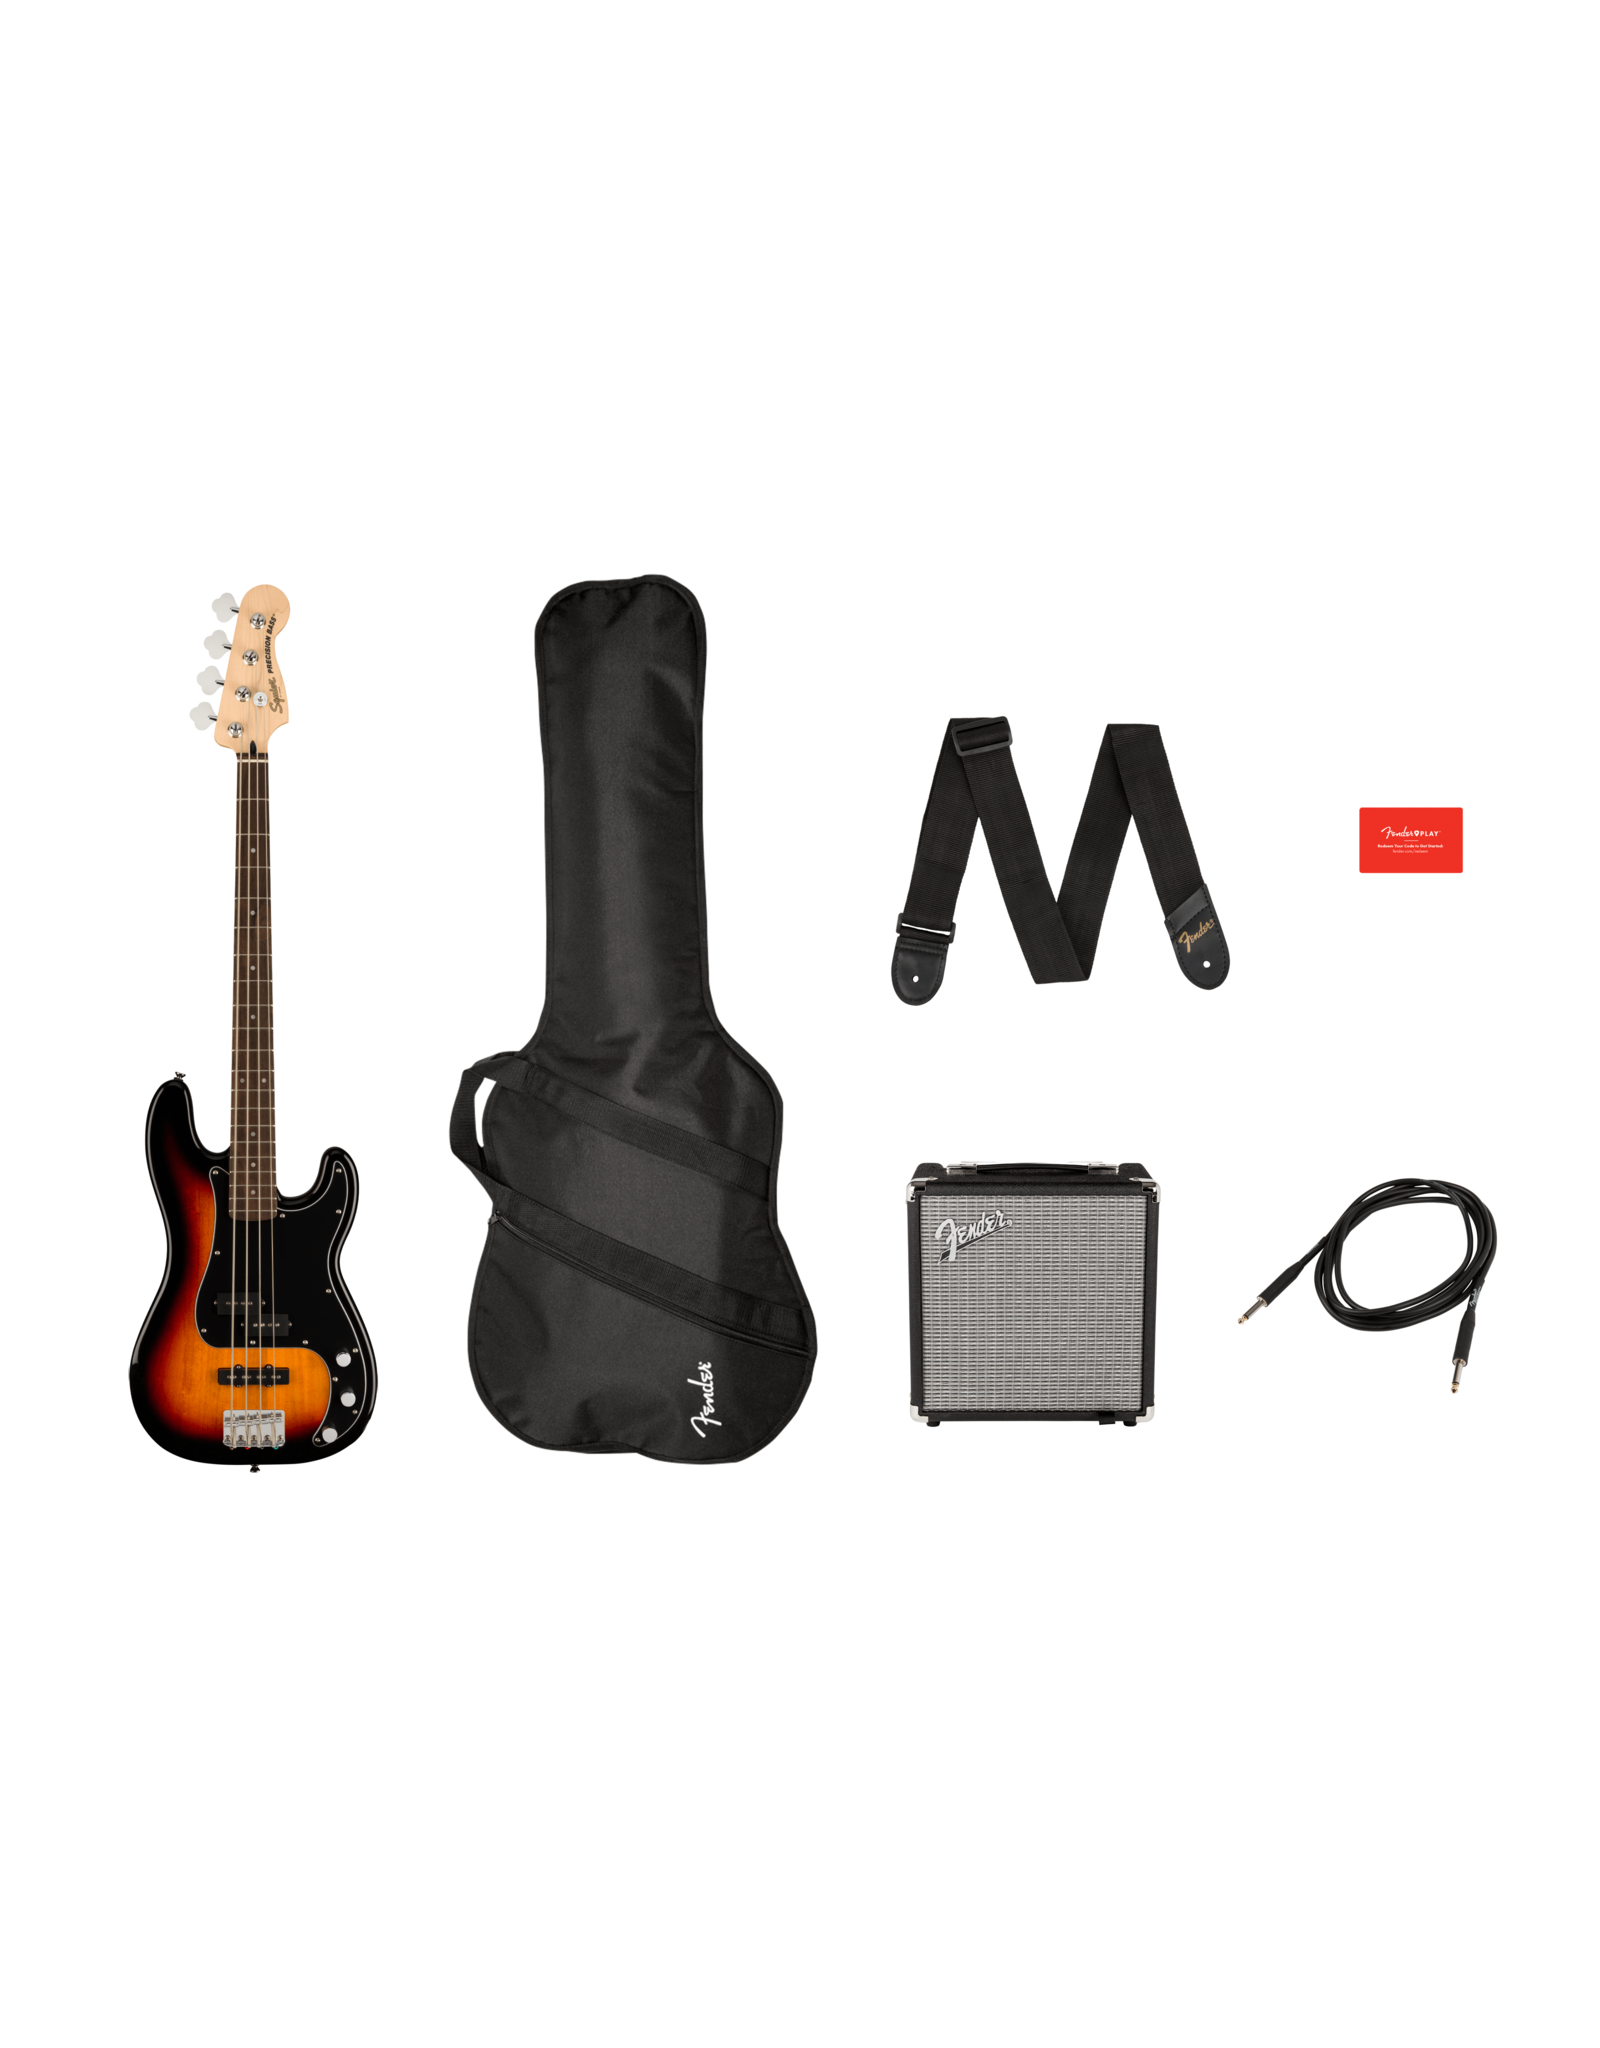 Squier Squier Affinity Series Precision Bass PJ Pack, Laurel Fingerboard, 3-Color Sunburst, Gig Bag, Rumble 15 - 120V